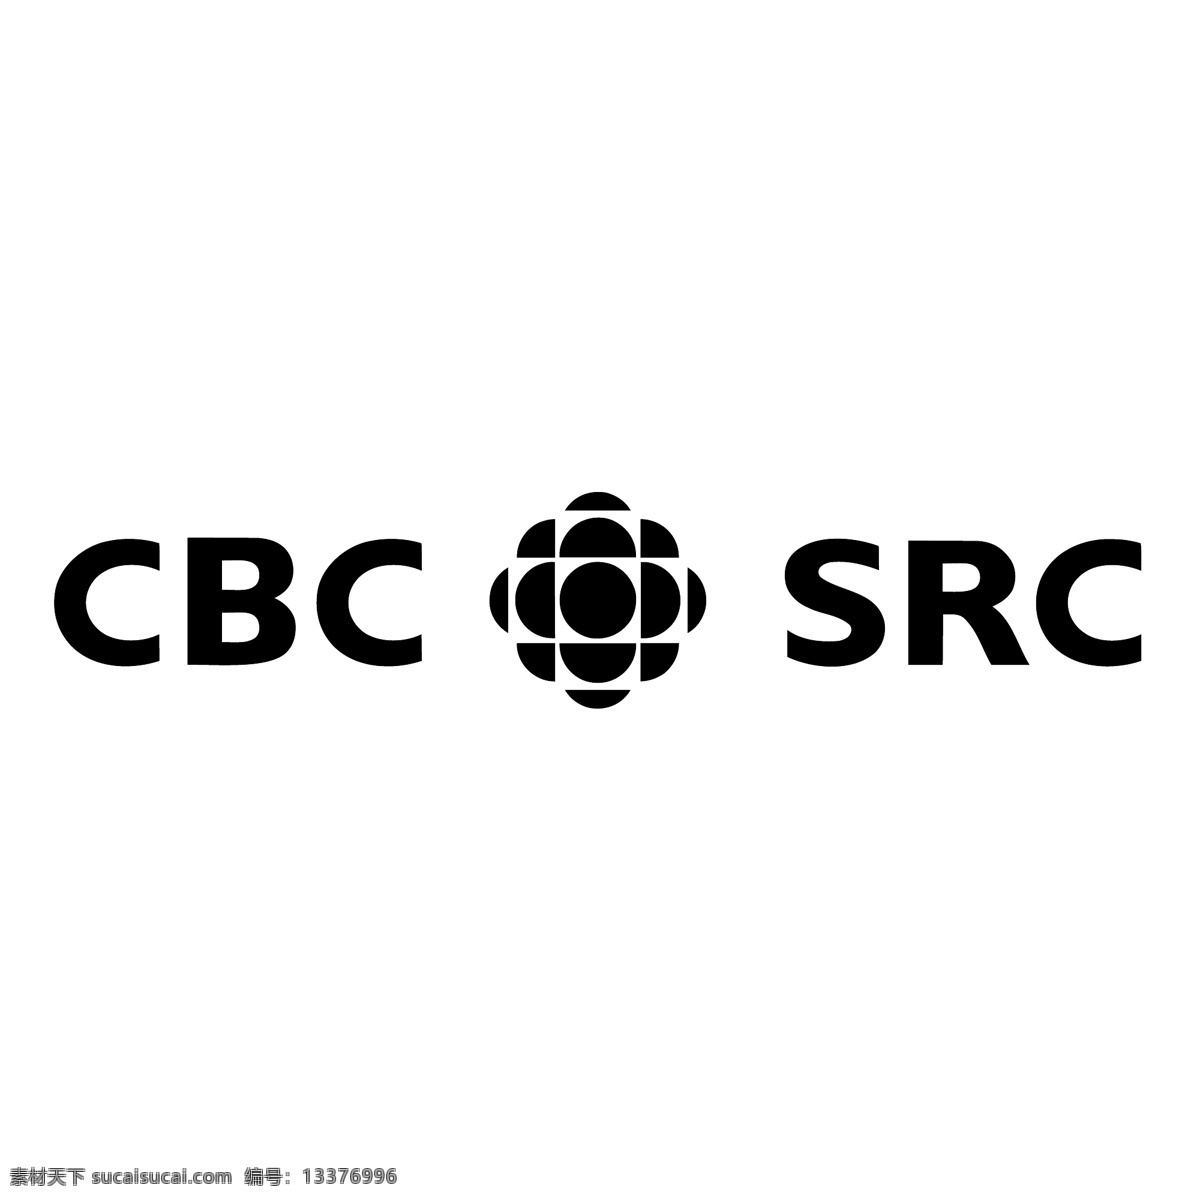 cbc src 矢量cbc cbc标志 矢量eps 矢量 cbc向量 向量 eps标志 标识 加拿大 广播 公司 电台 标志 向量的标志 矢量图 建筑家居